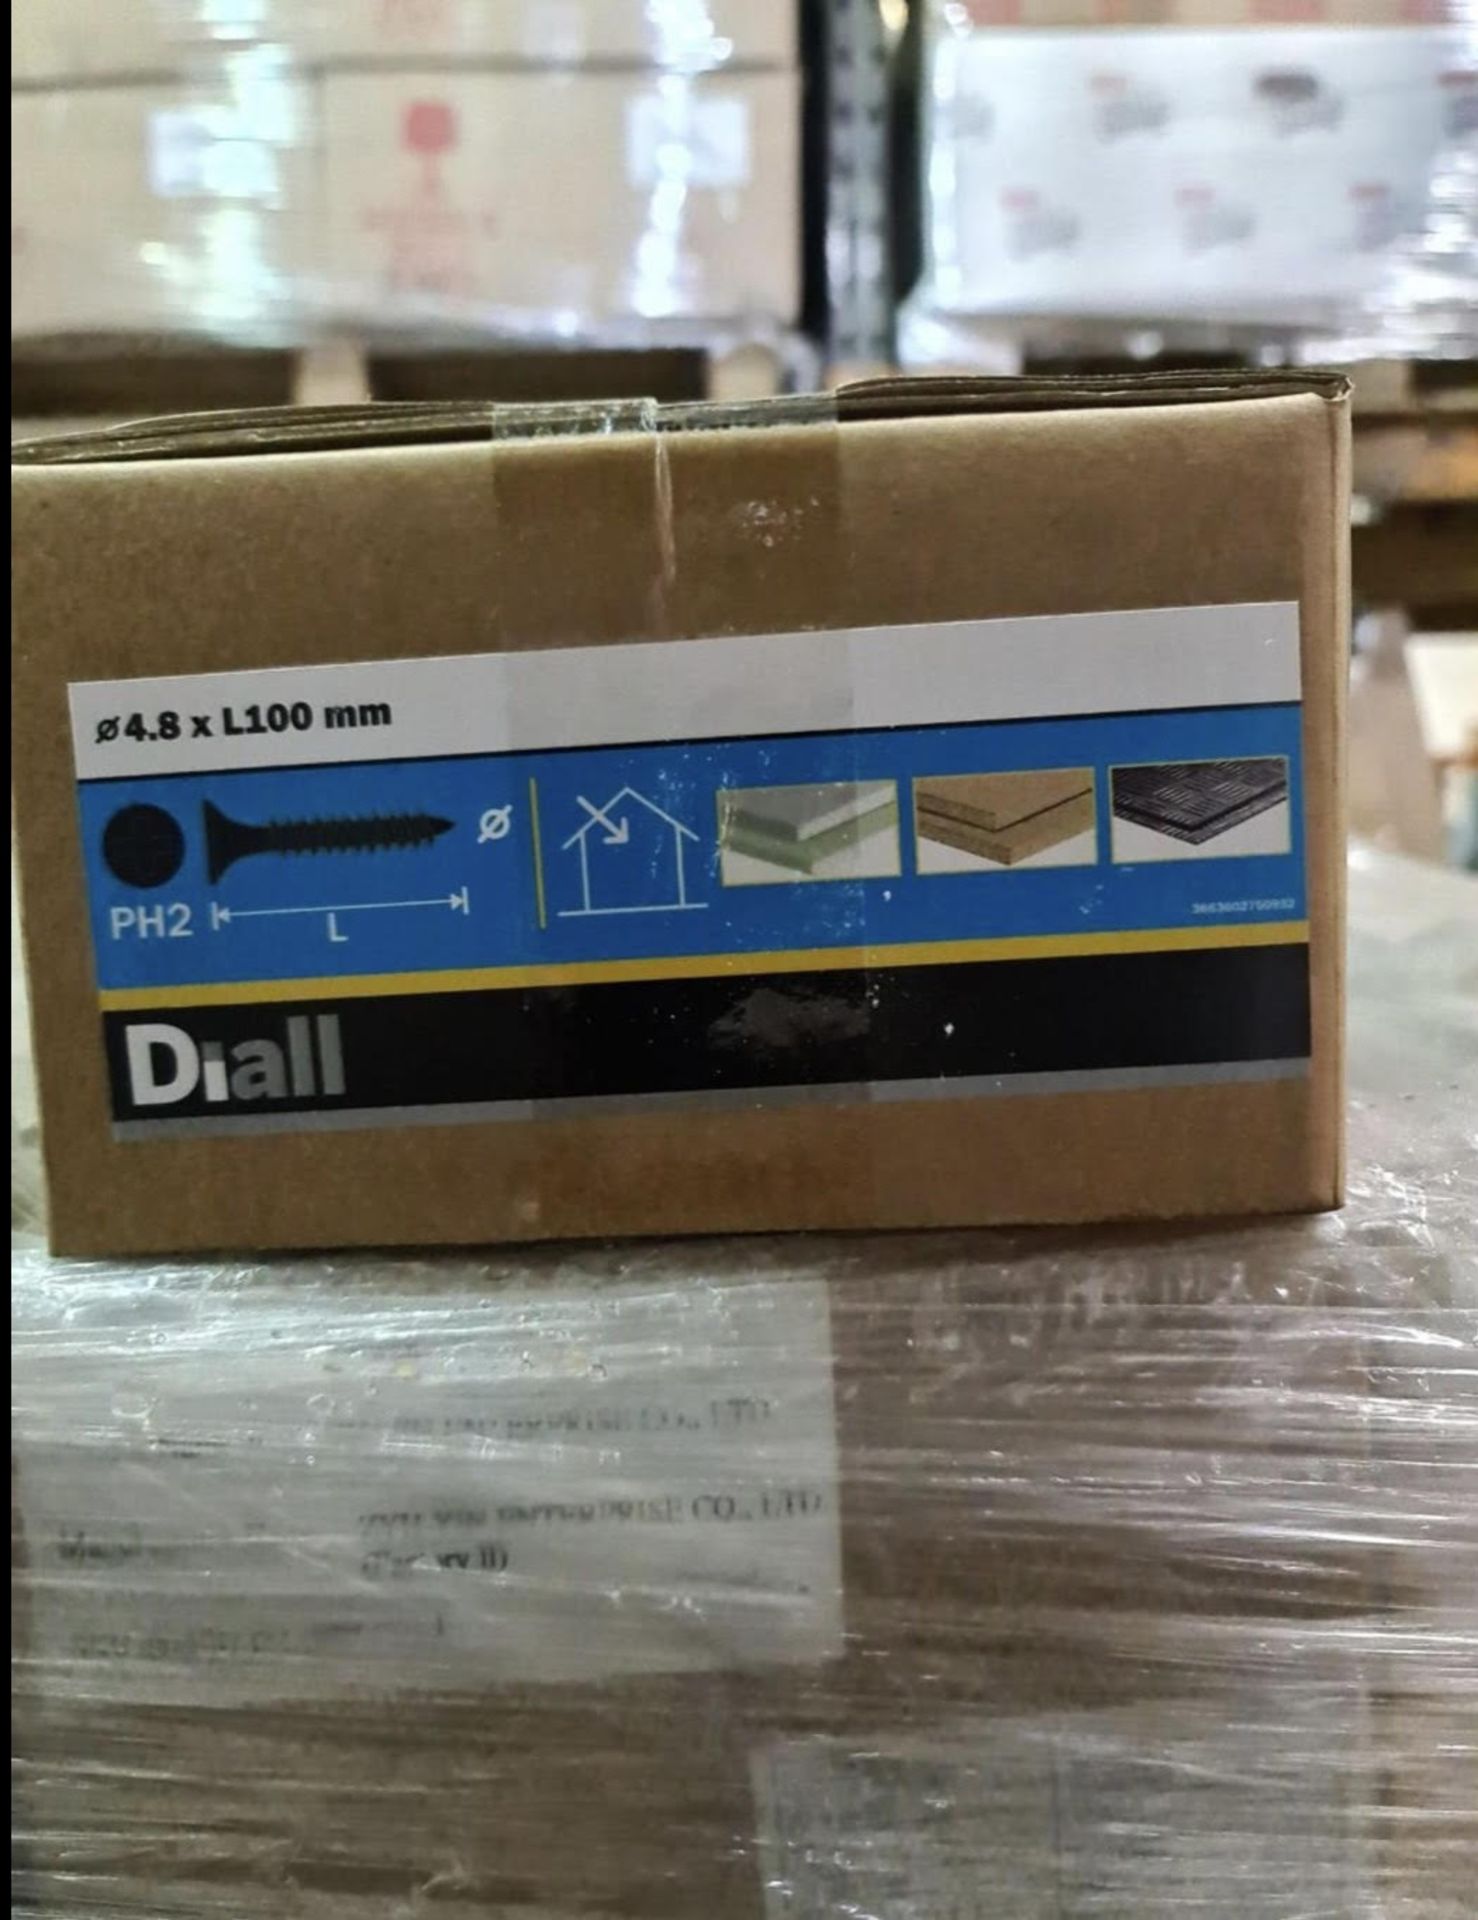 Brand new 4kg box of diall 4.8 x l100mm multi use screws